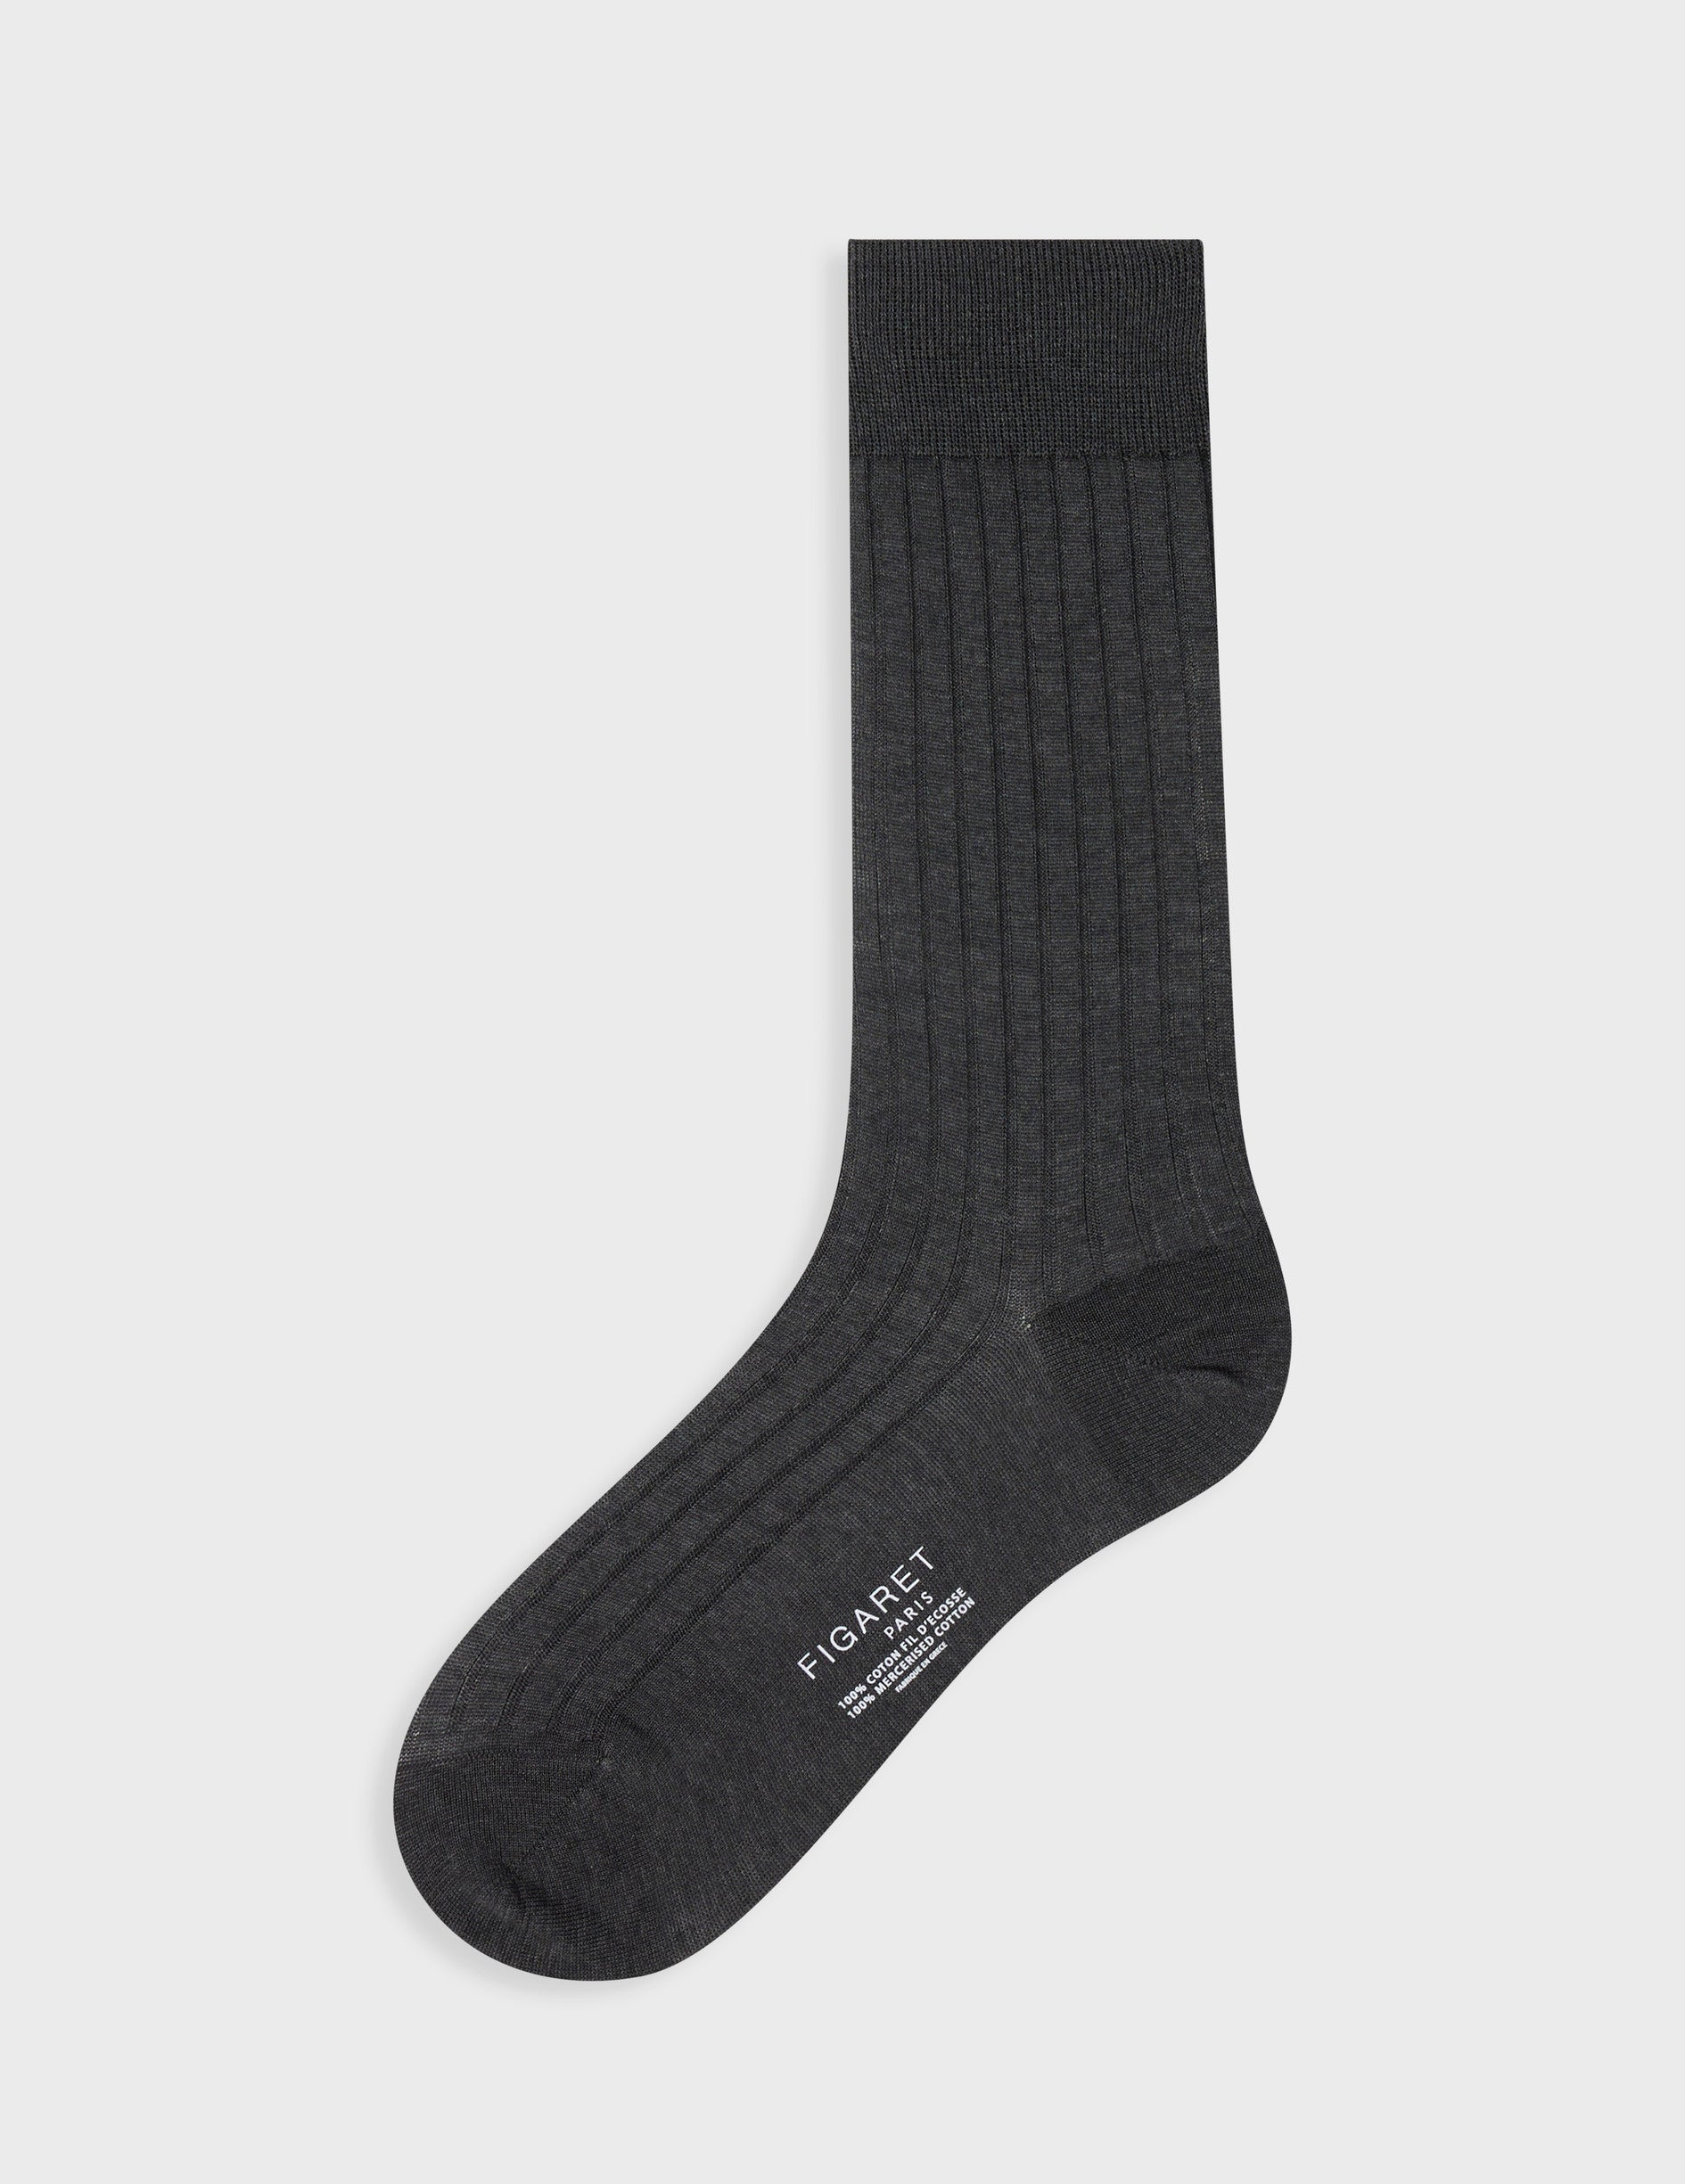 Charcoal double lisle thread socks